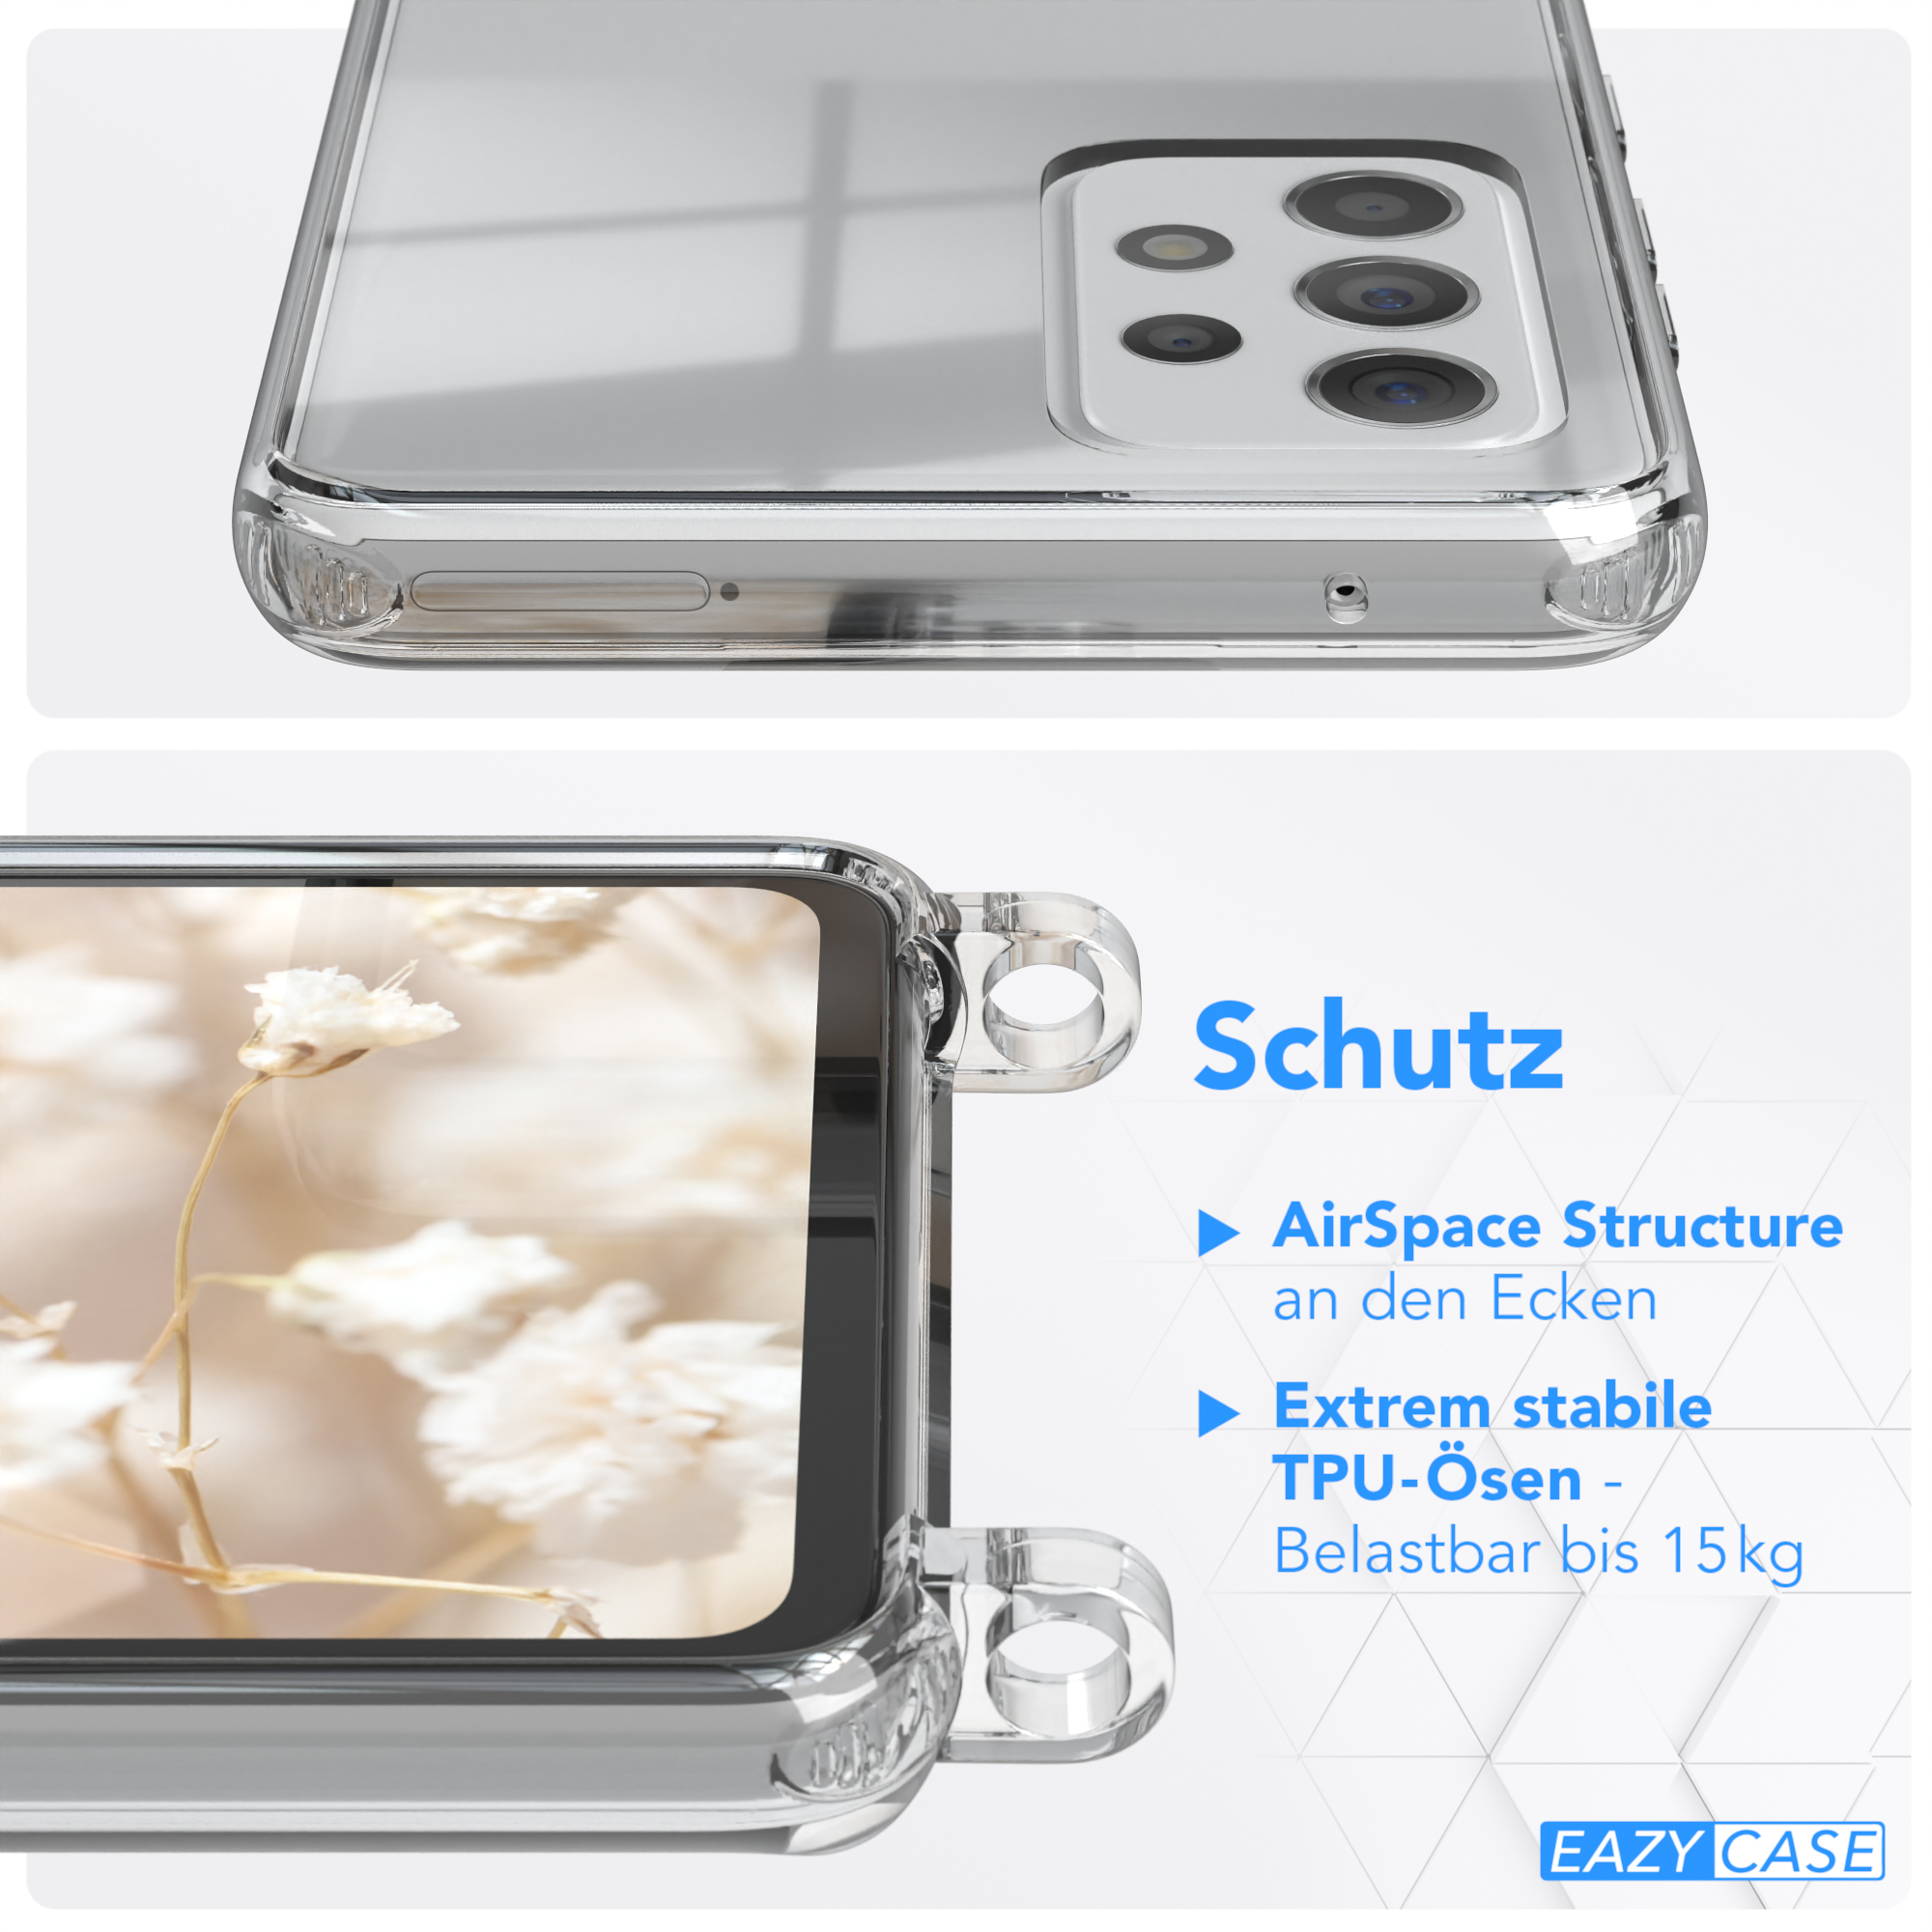 EAZY CASE Transparente 5G, A52s / A52 Handyhülle Boho Orange Galaxy Style, Samsung, / Umhängetasche, Kordel A52 Grün 5G mit 